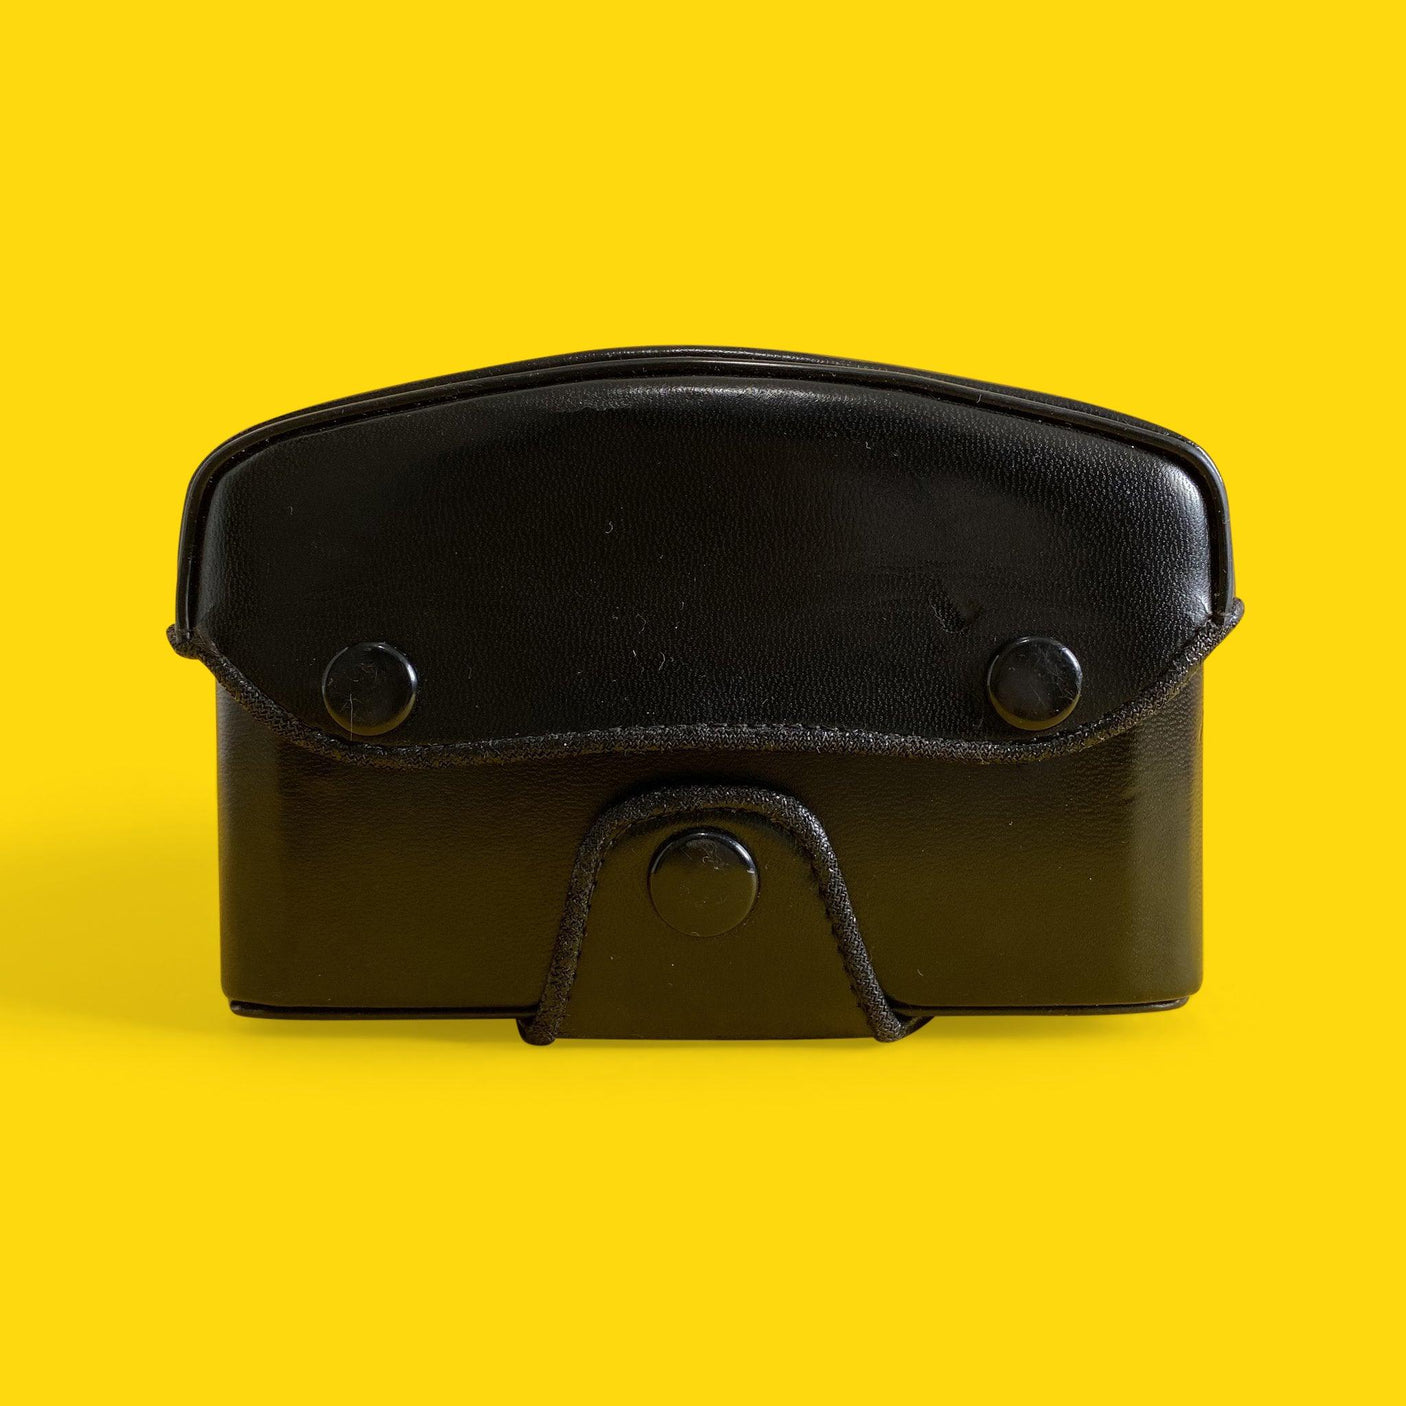 Original Olympus OM SLR Black Leather Case / Bag for OM10, OM20, OM30, OM1, OM2, OM3, OM4